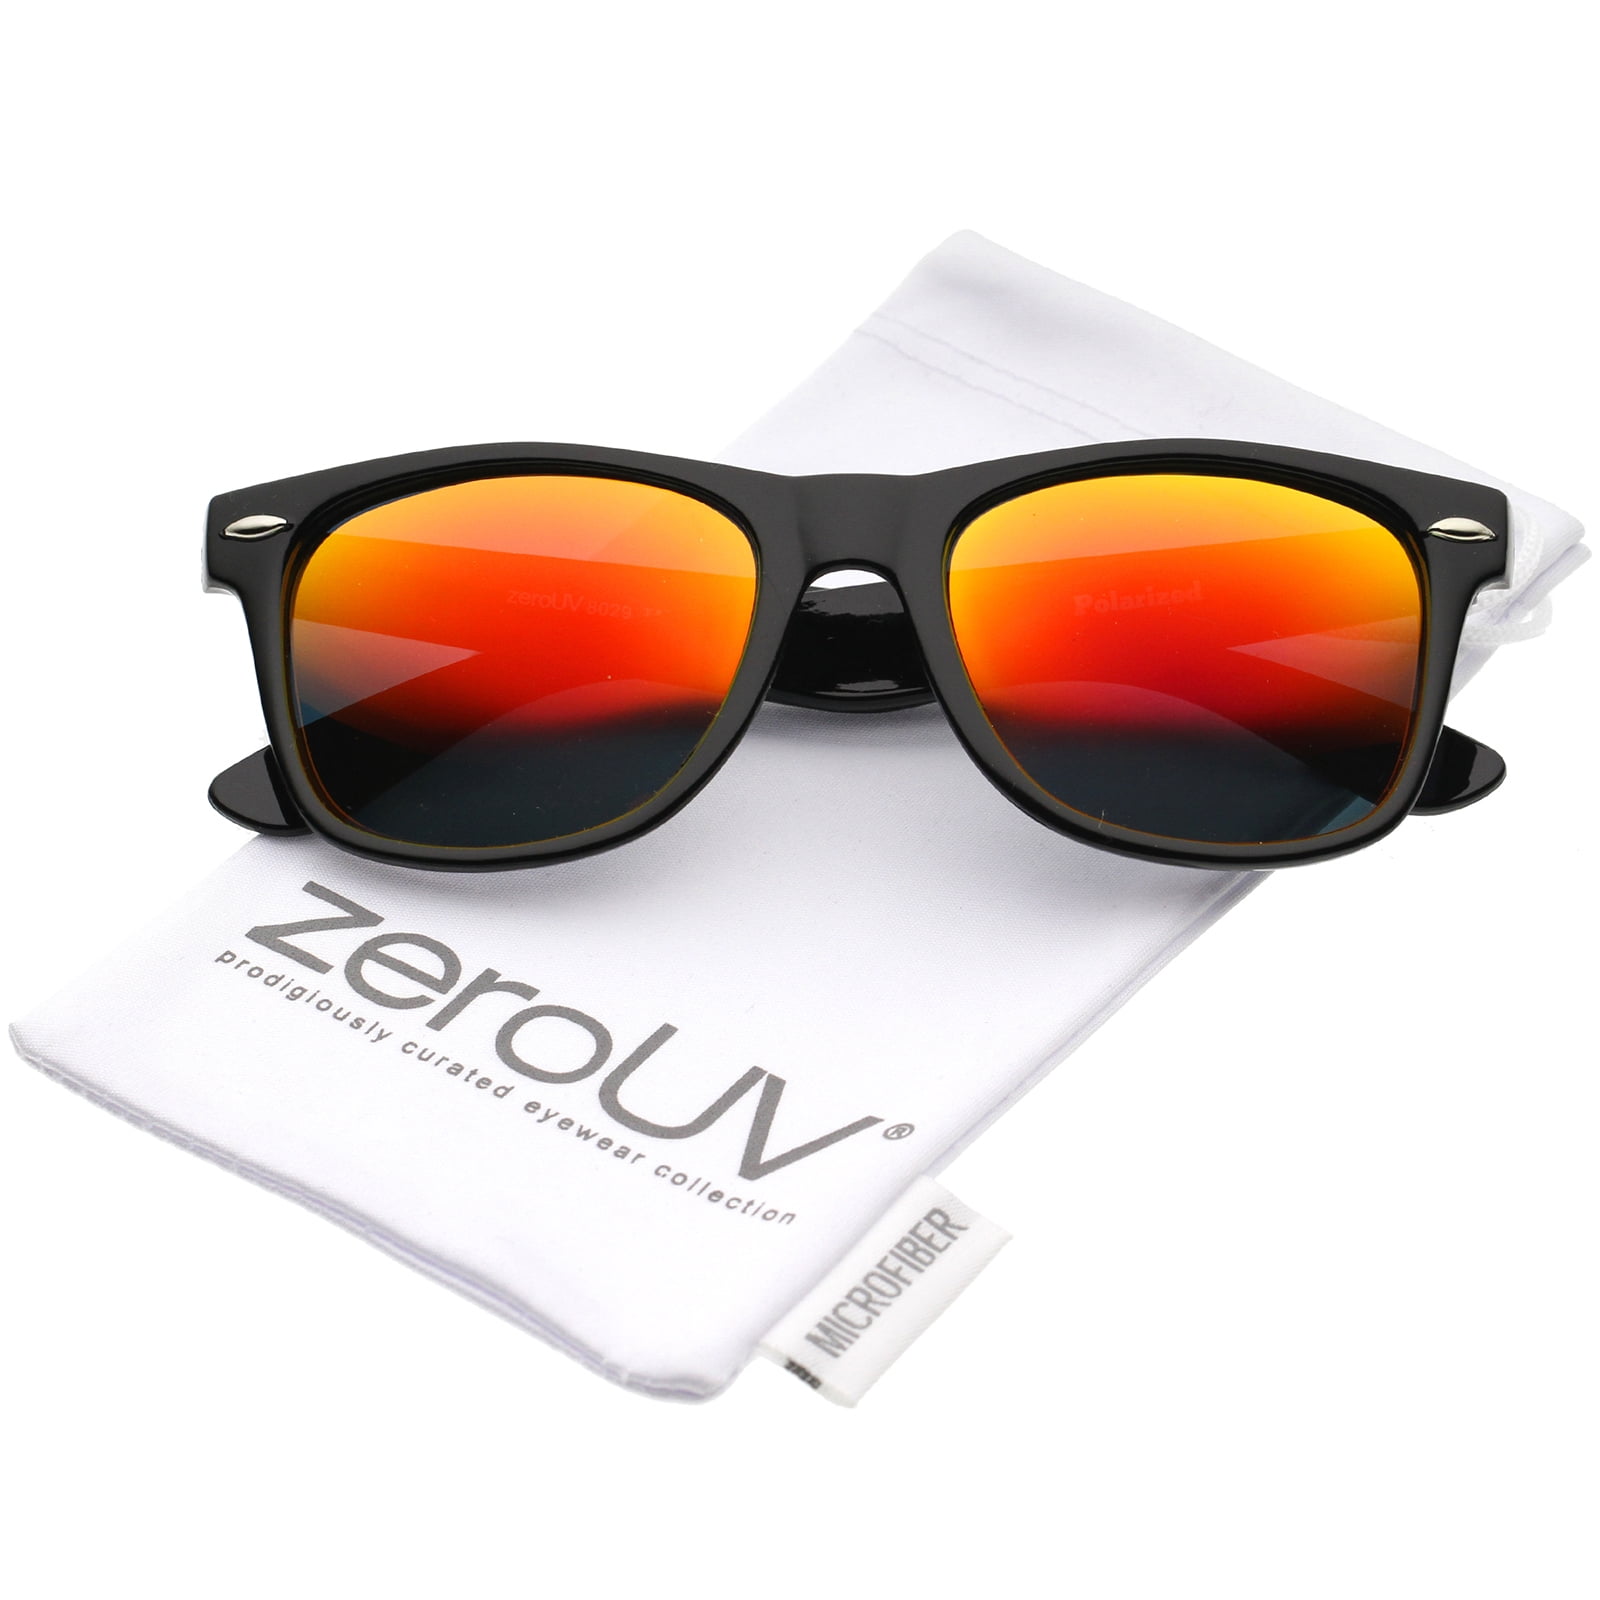 Zerouv Unisex Retro Colored Mirror Polarized Lens Square Horn Rimmed Sunglasses 55mm Black